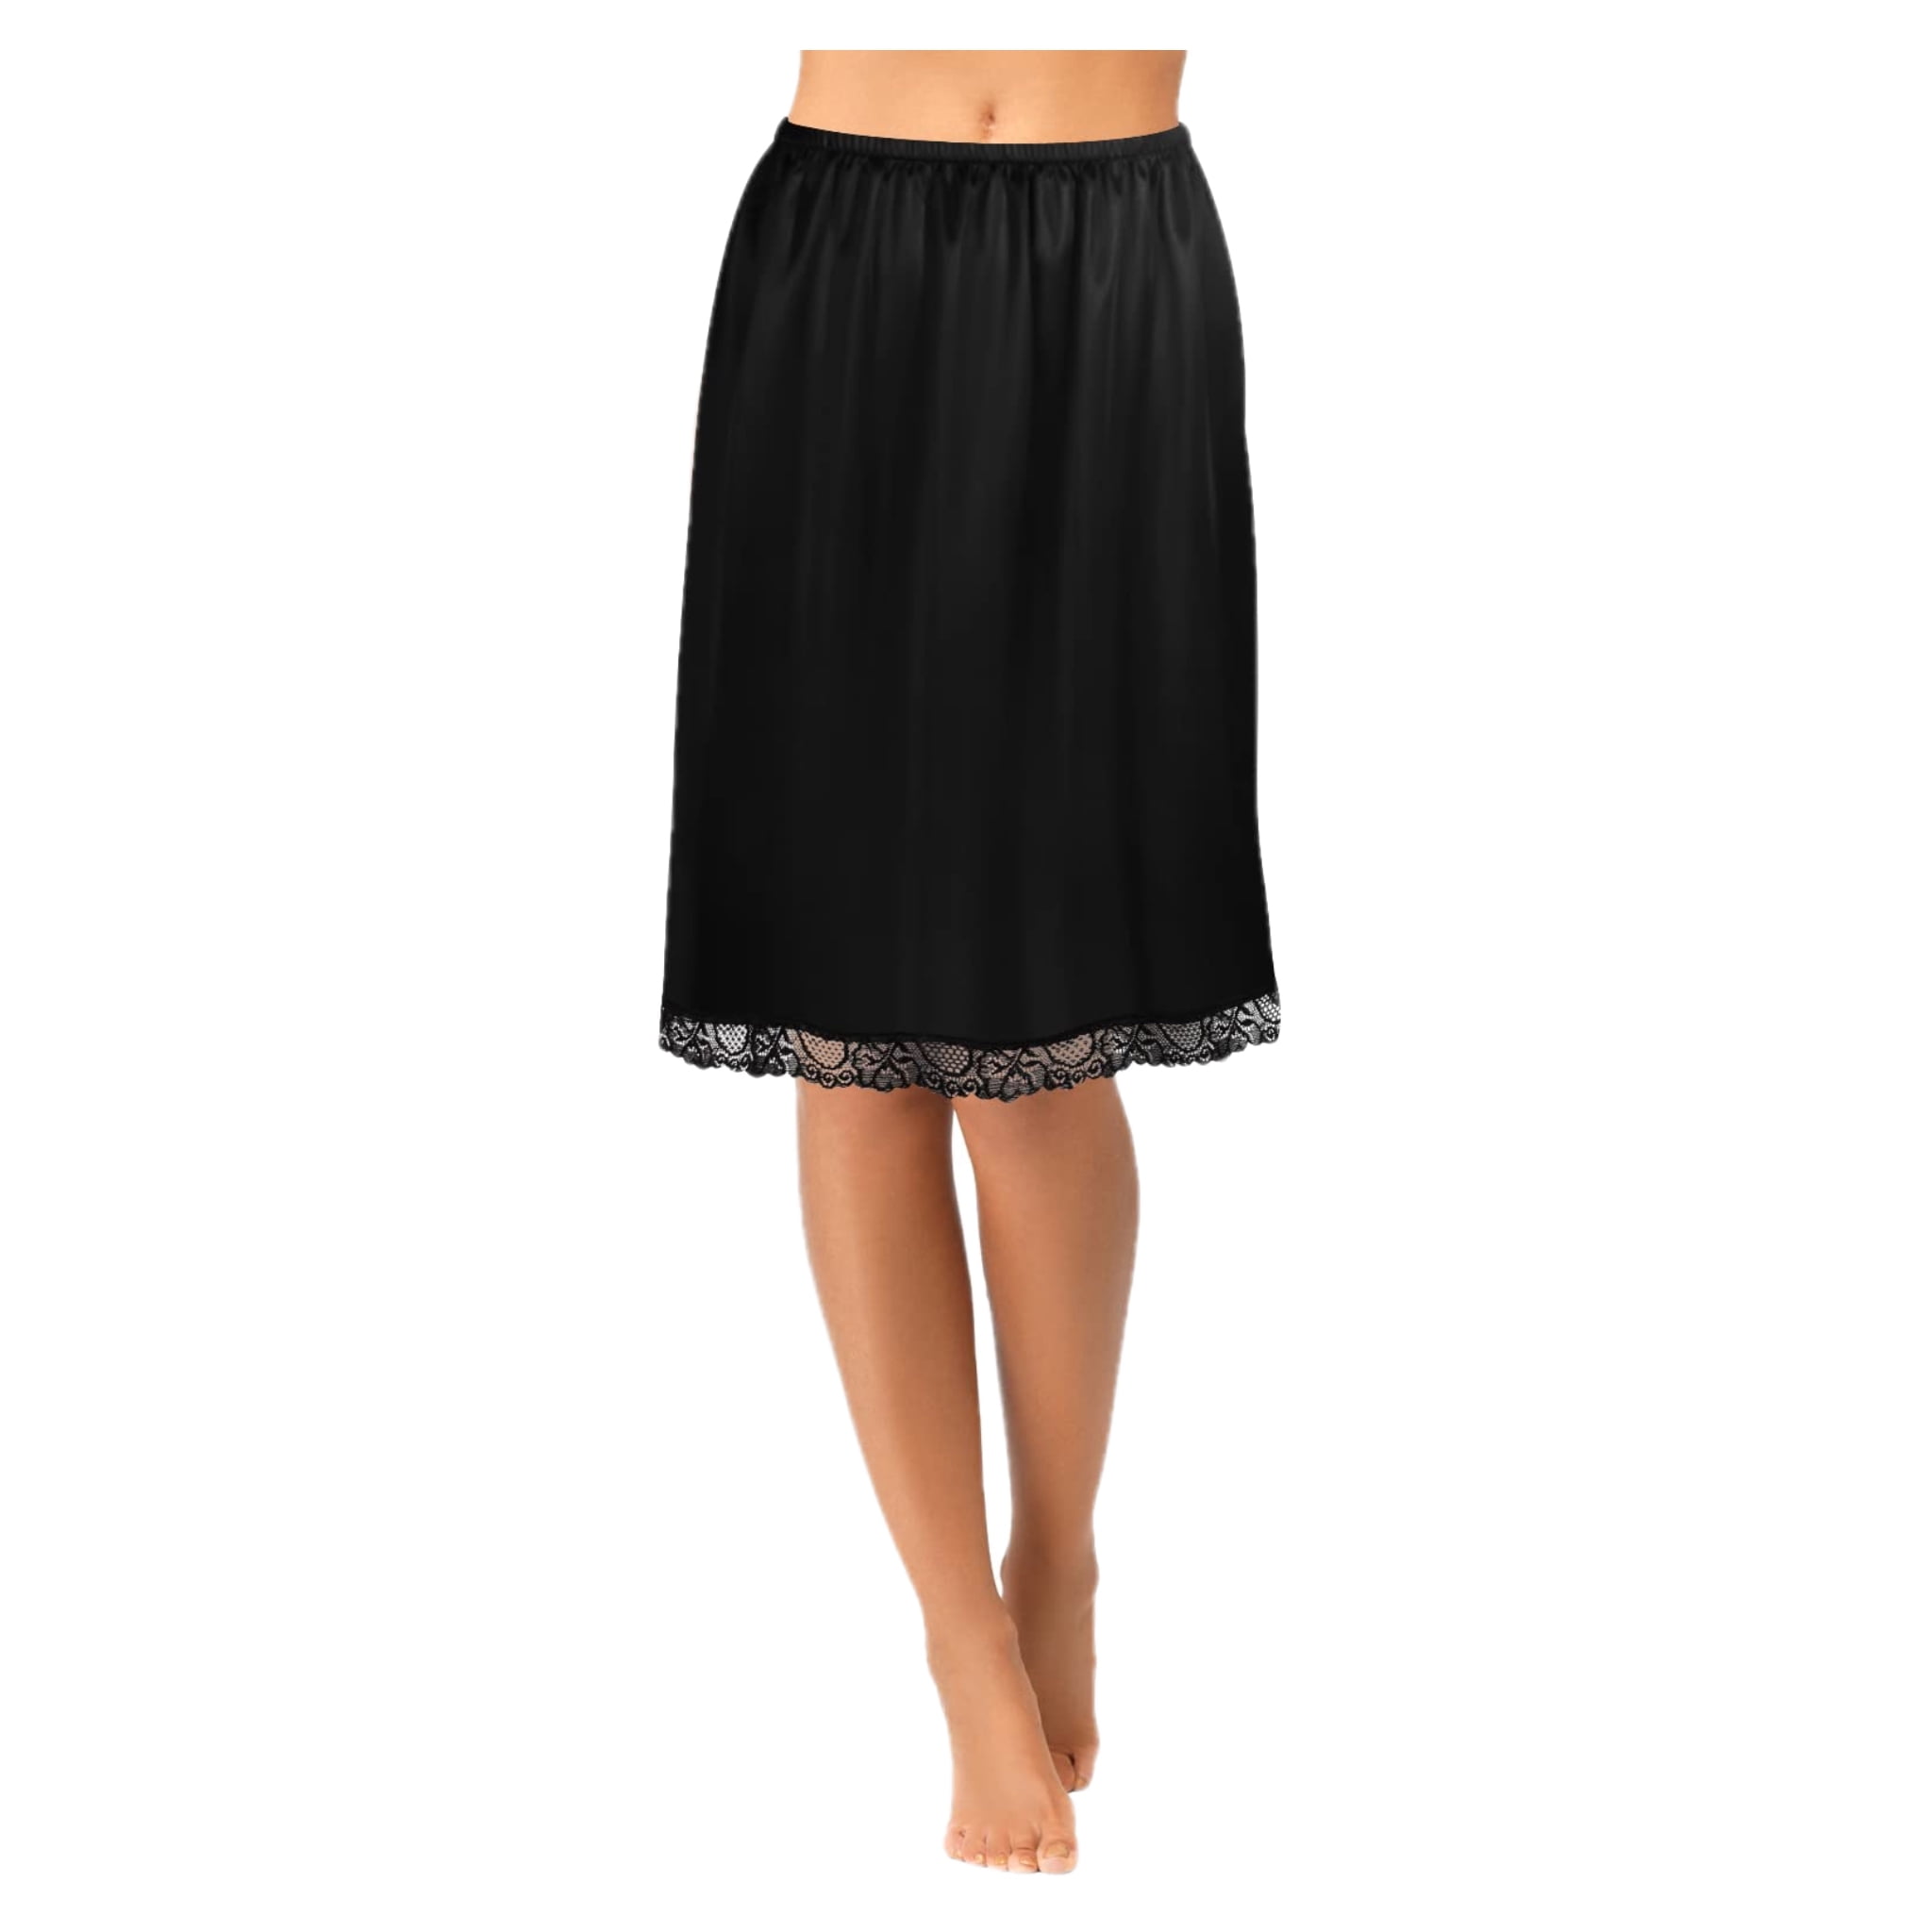 GXFC Women's Satin Half Slip Side Slit Lace Trim Mini Skirt Elastic ...